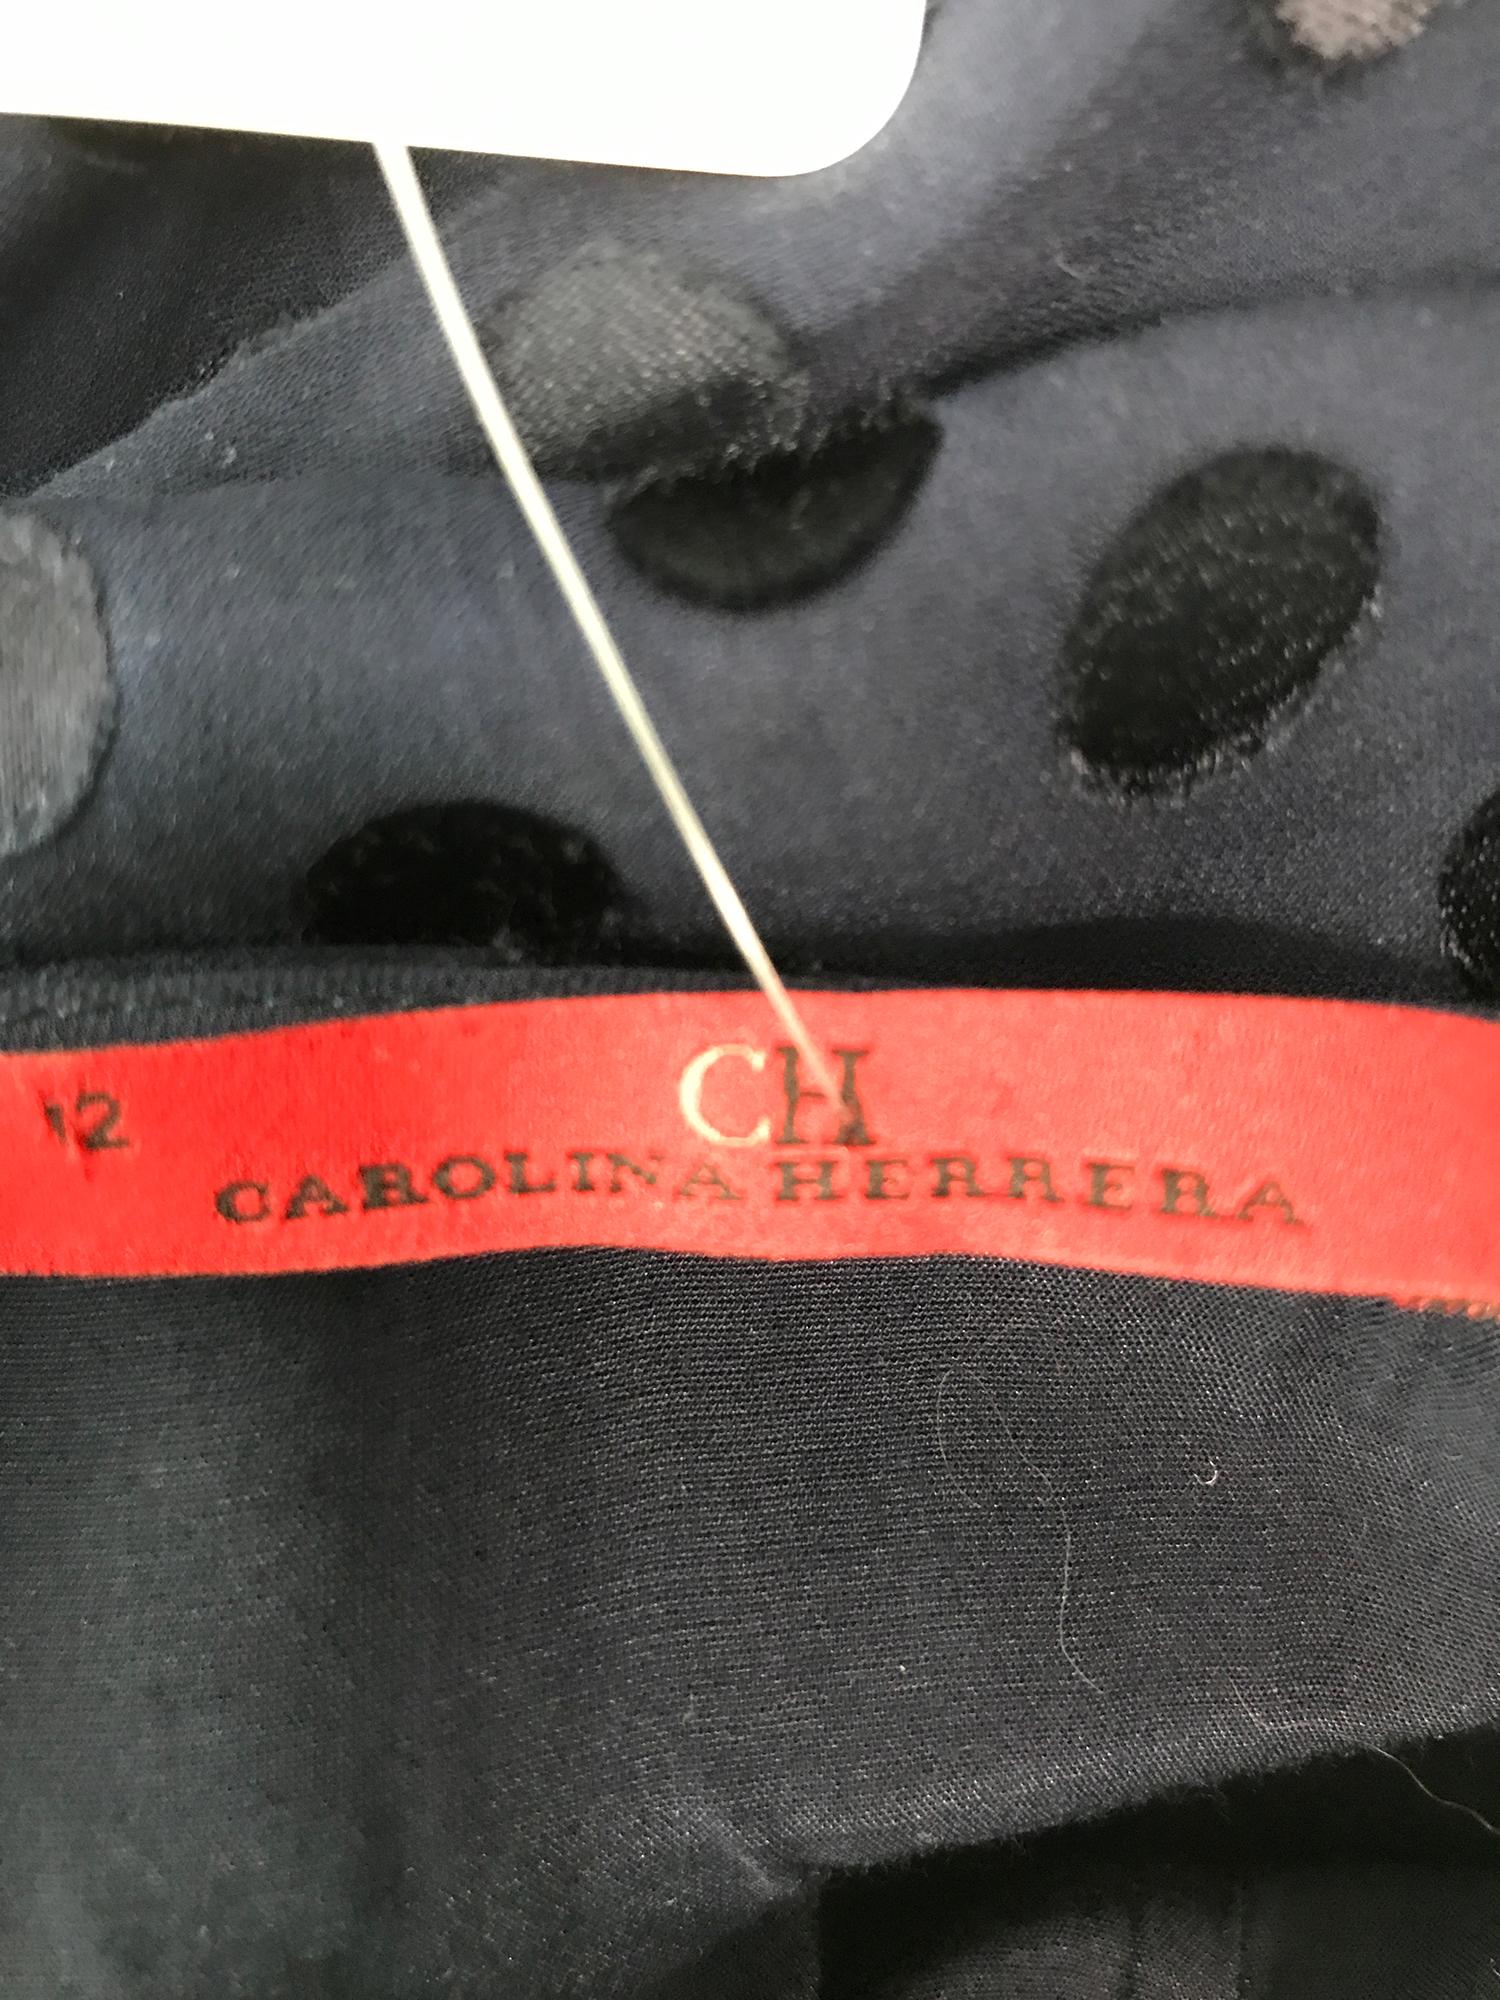 Carolina Herrera Dark Navy Dot Voided Velvet Ruffle Sleeve Top 6